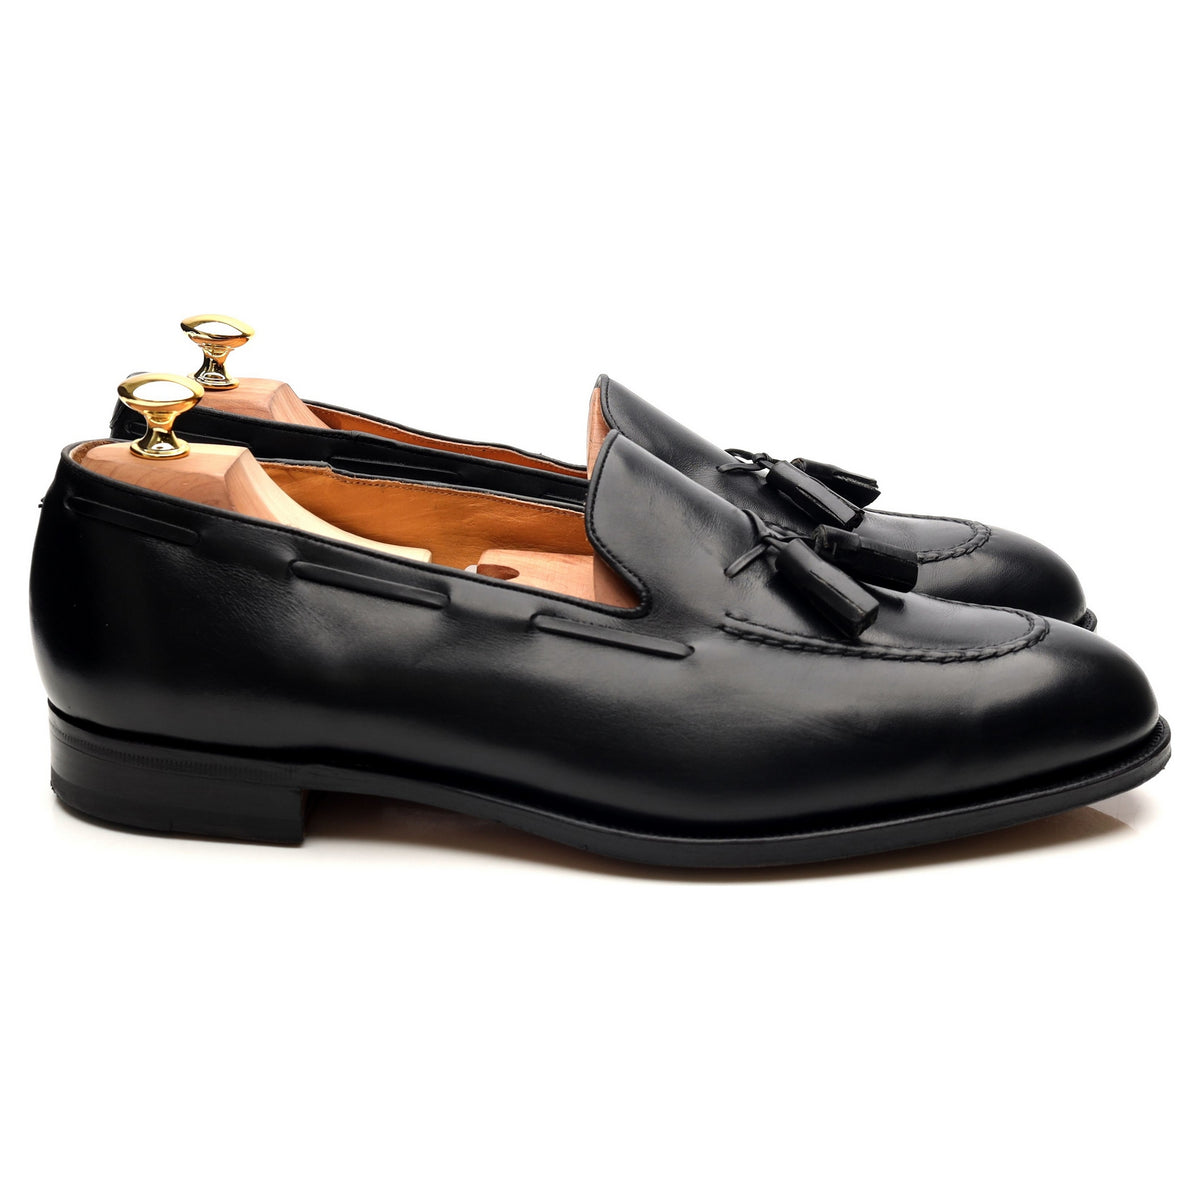 Black Leather Tassel Loafers UK 11